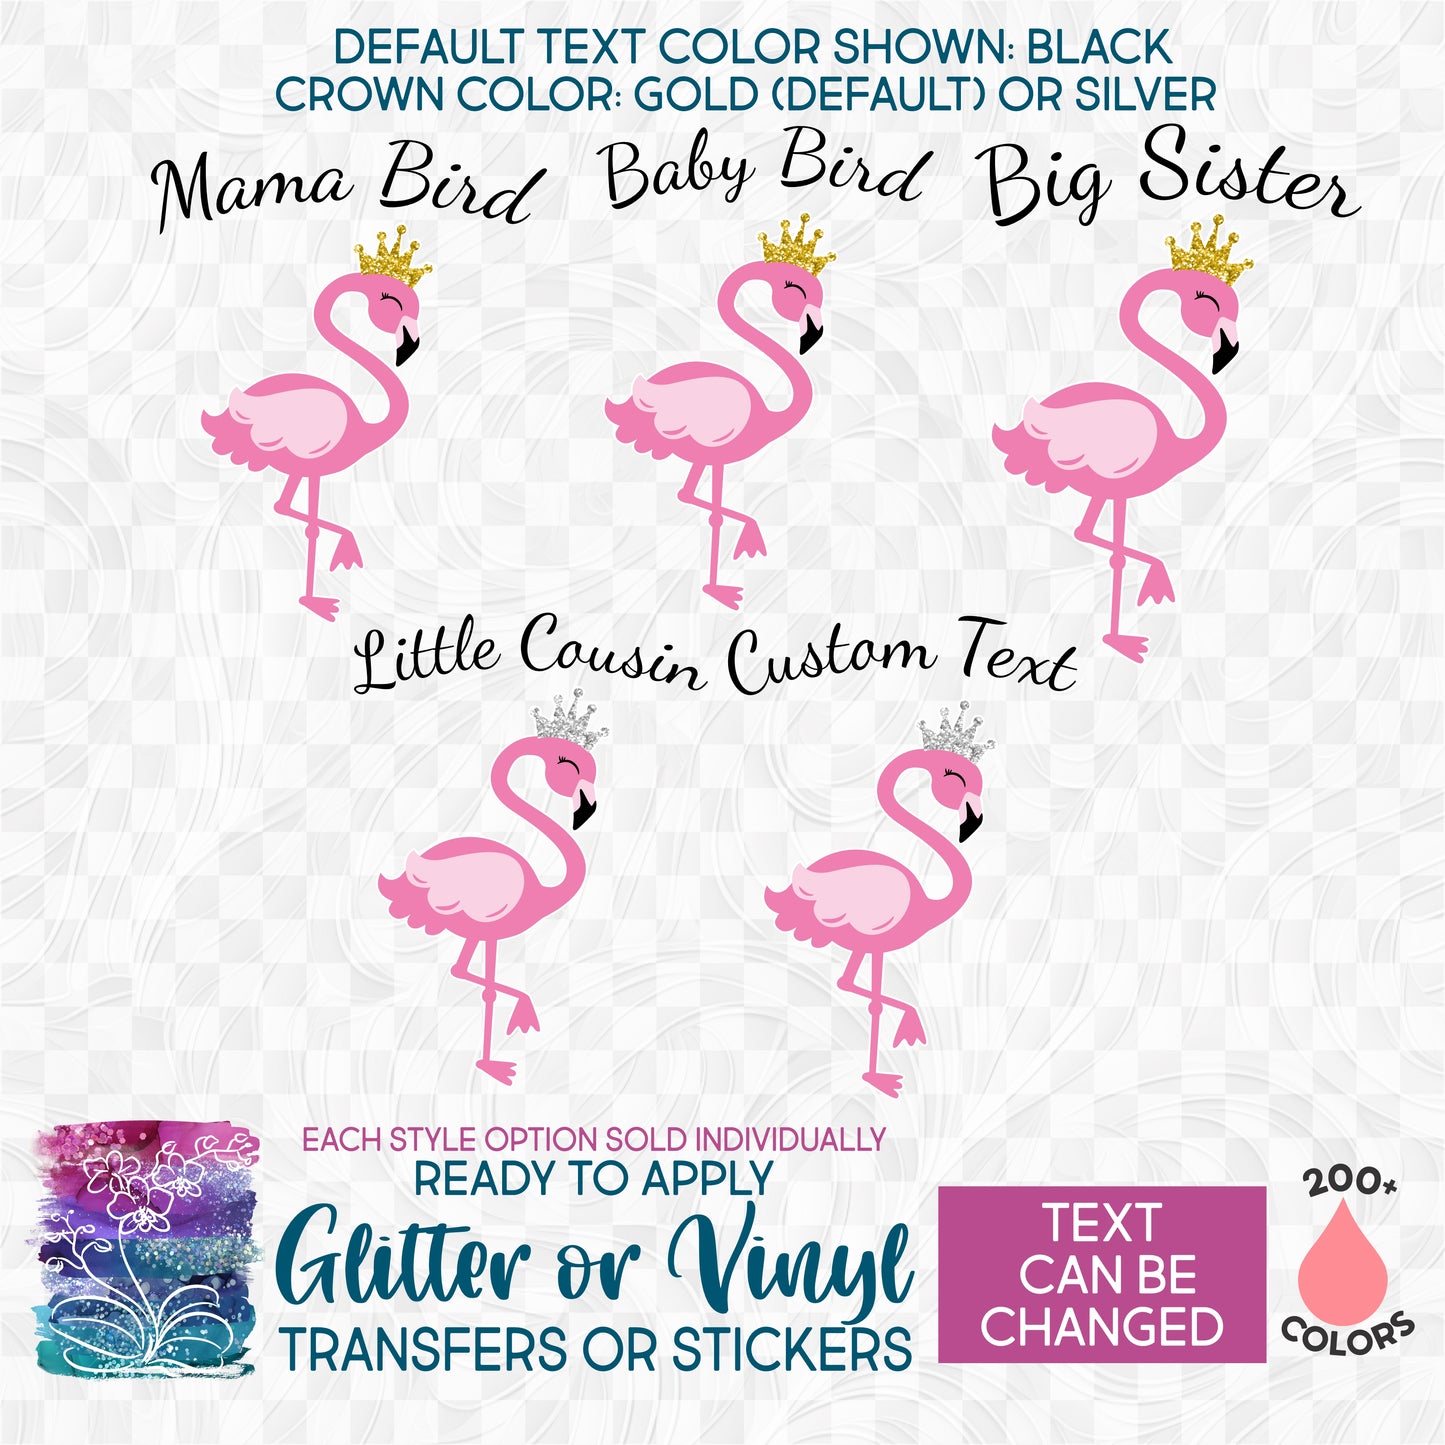 (s110-3D) Mama Bird, Baby Bird, Flamingo Crown Custom Text Glitter or Vinyl Iron-On Transfer or Sticker